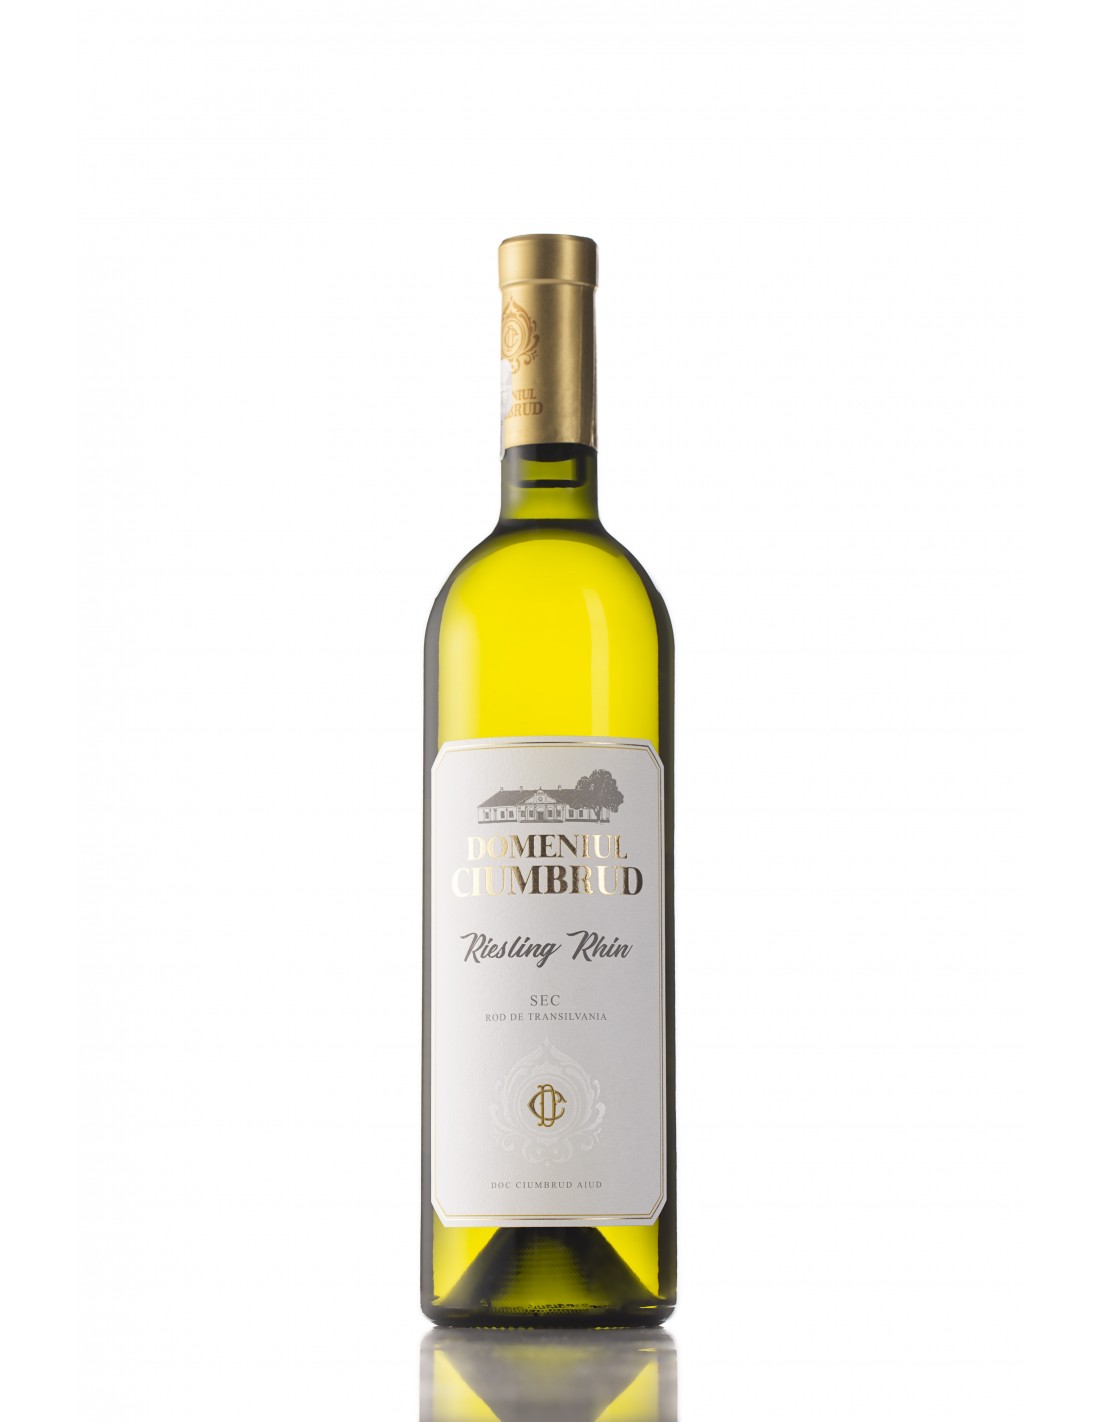 Vin alb sec, Riesling Rhein , Domeniul Ciumbrud, 12.2% alc., 0.75L, Romania alcooldiscount.ro